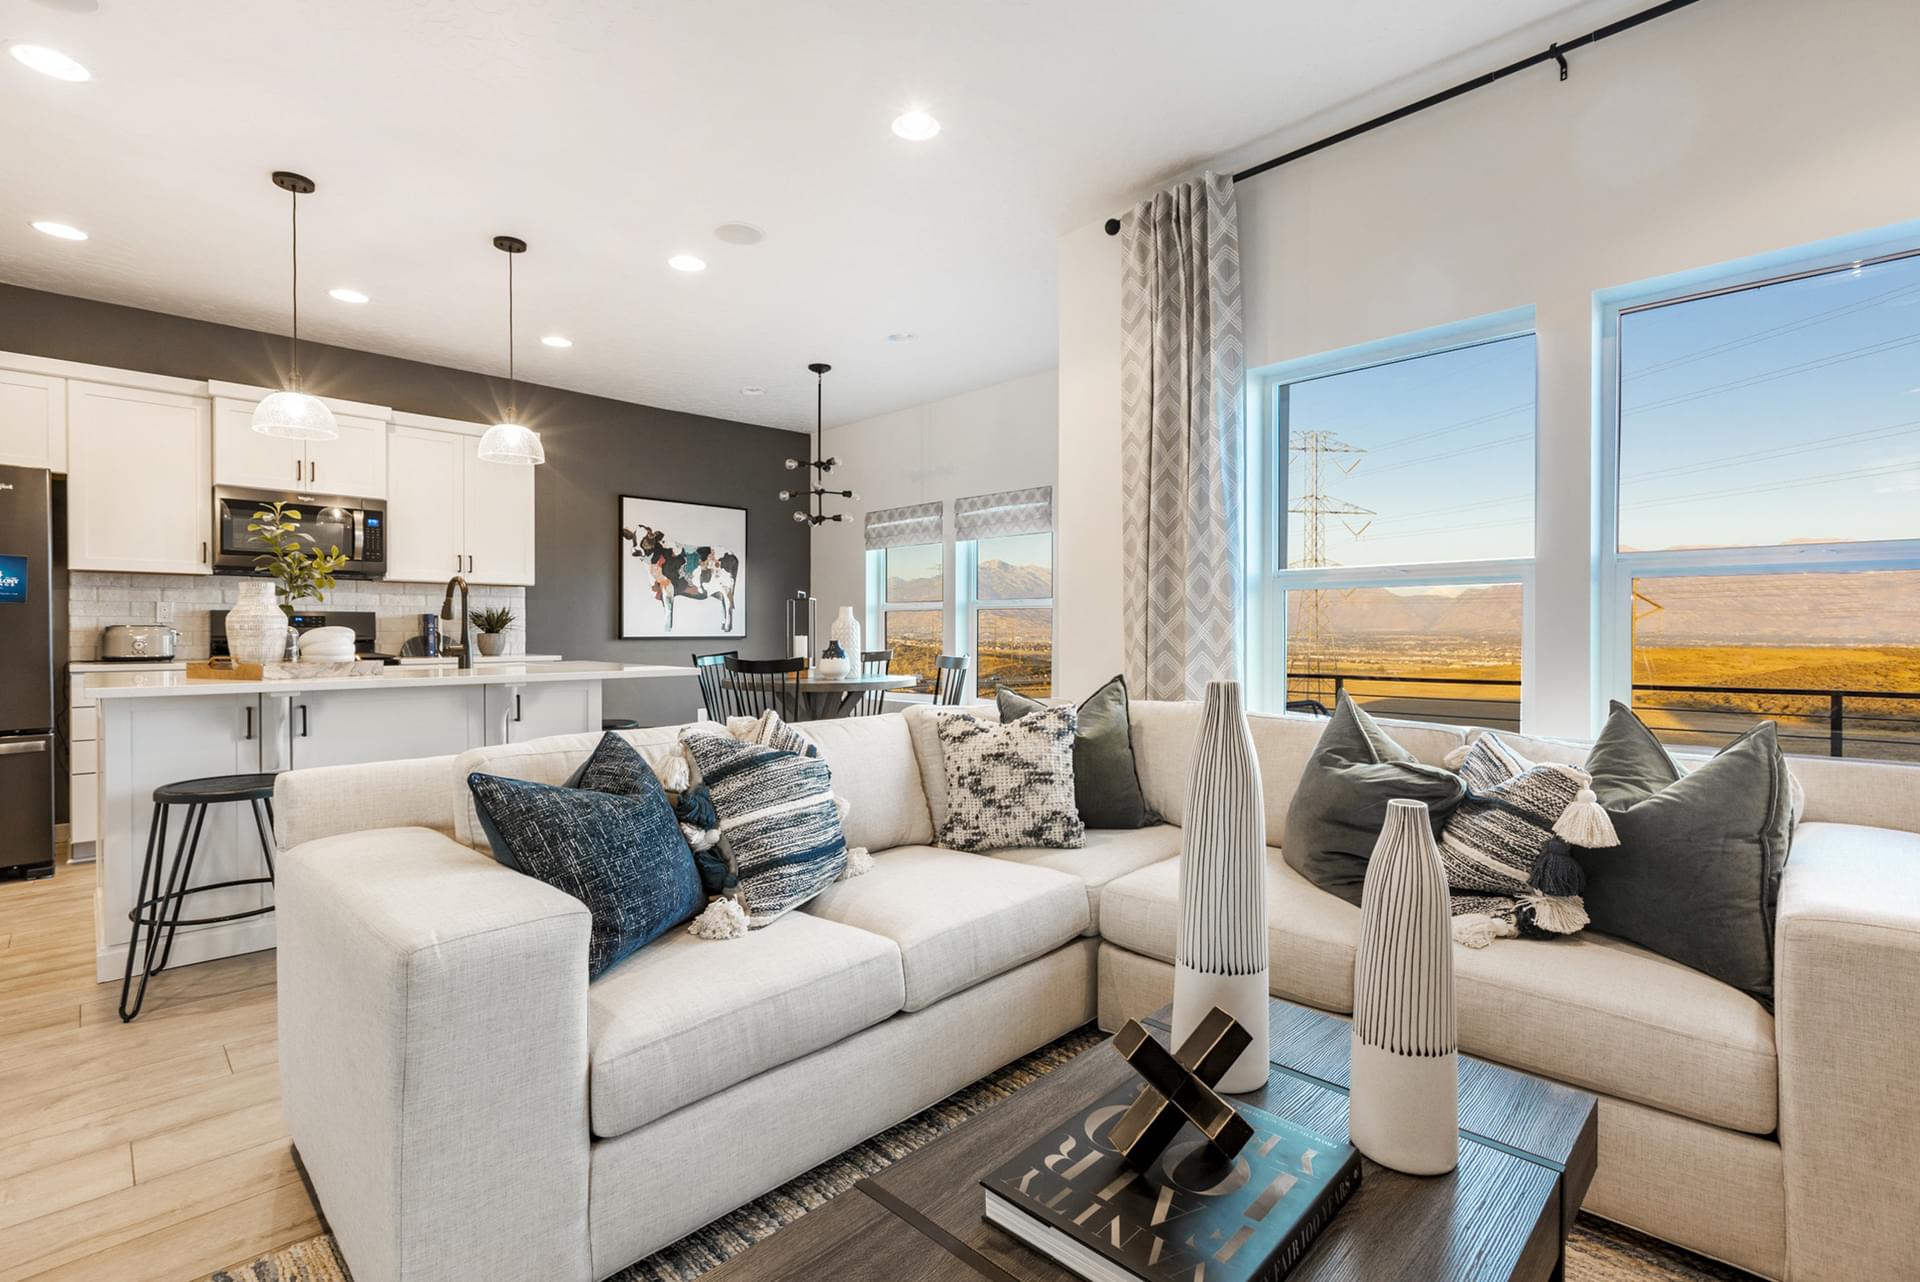 The The Sunrise Townhome new home floorplan in Utah